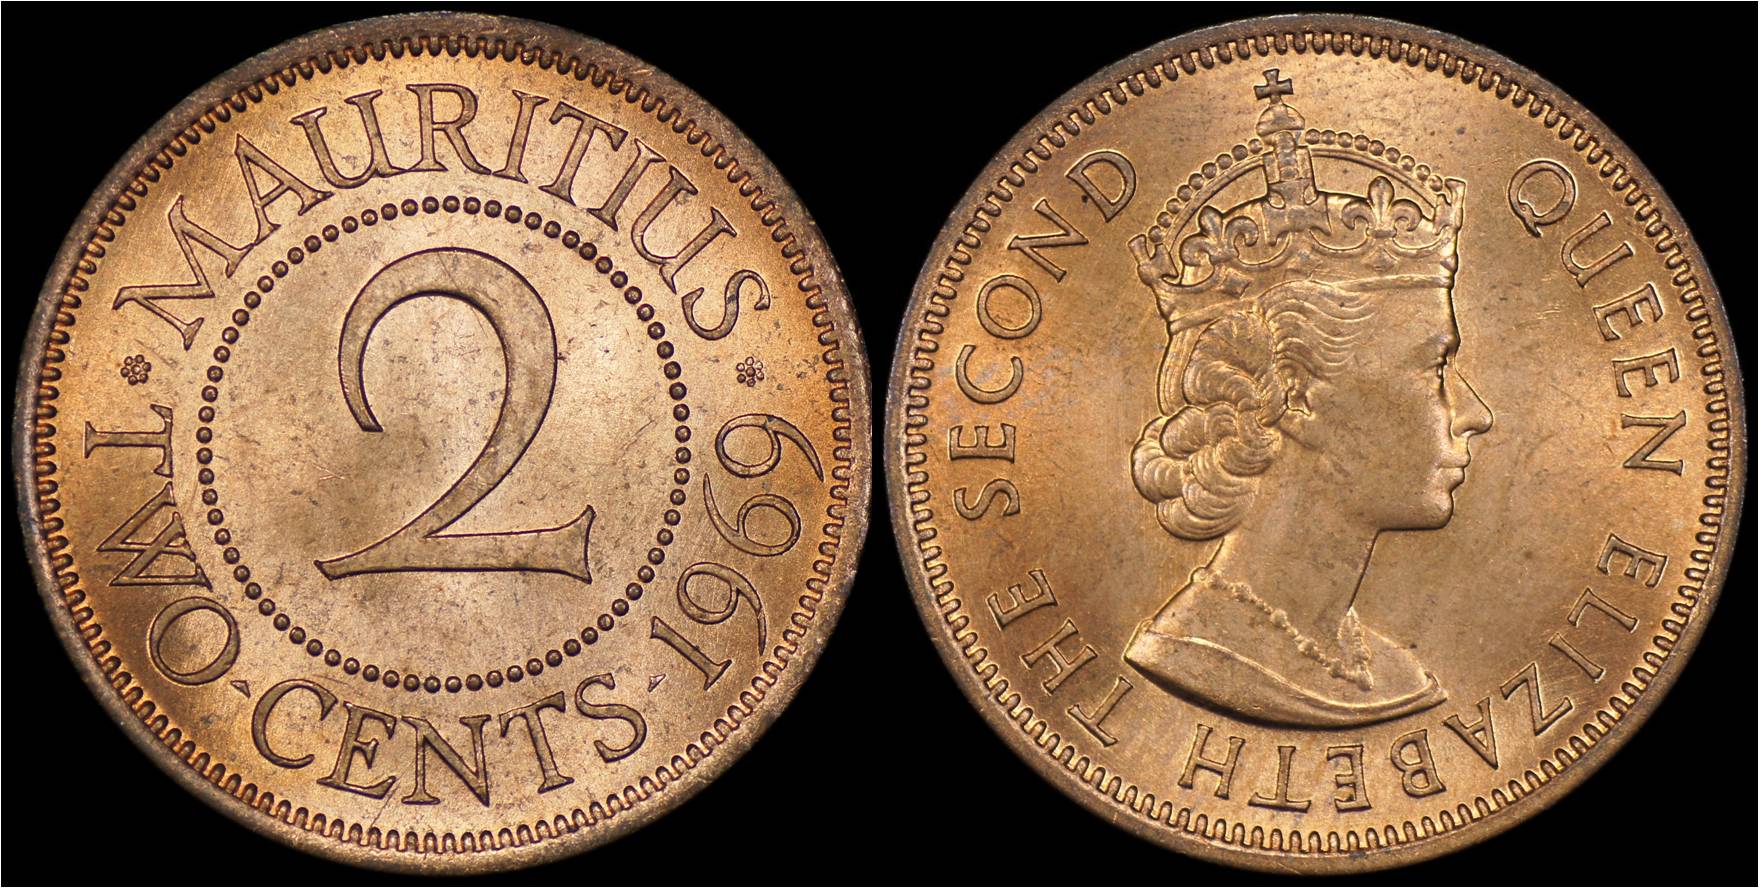 KM32 Mauritius 1969 2 cents.jpg